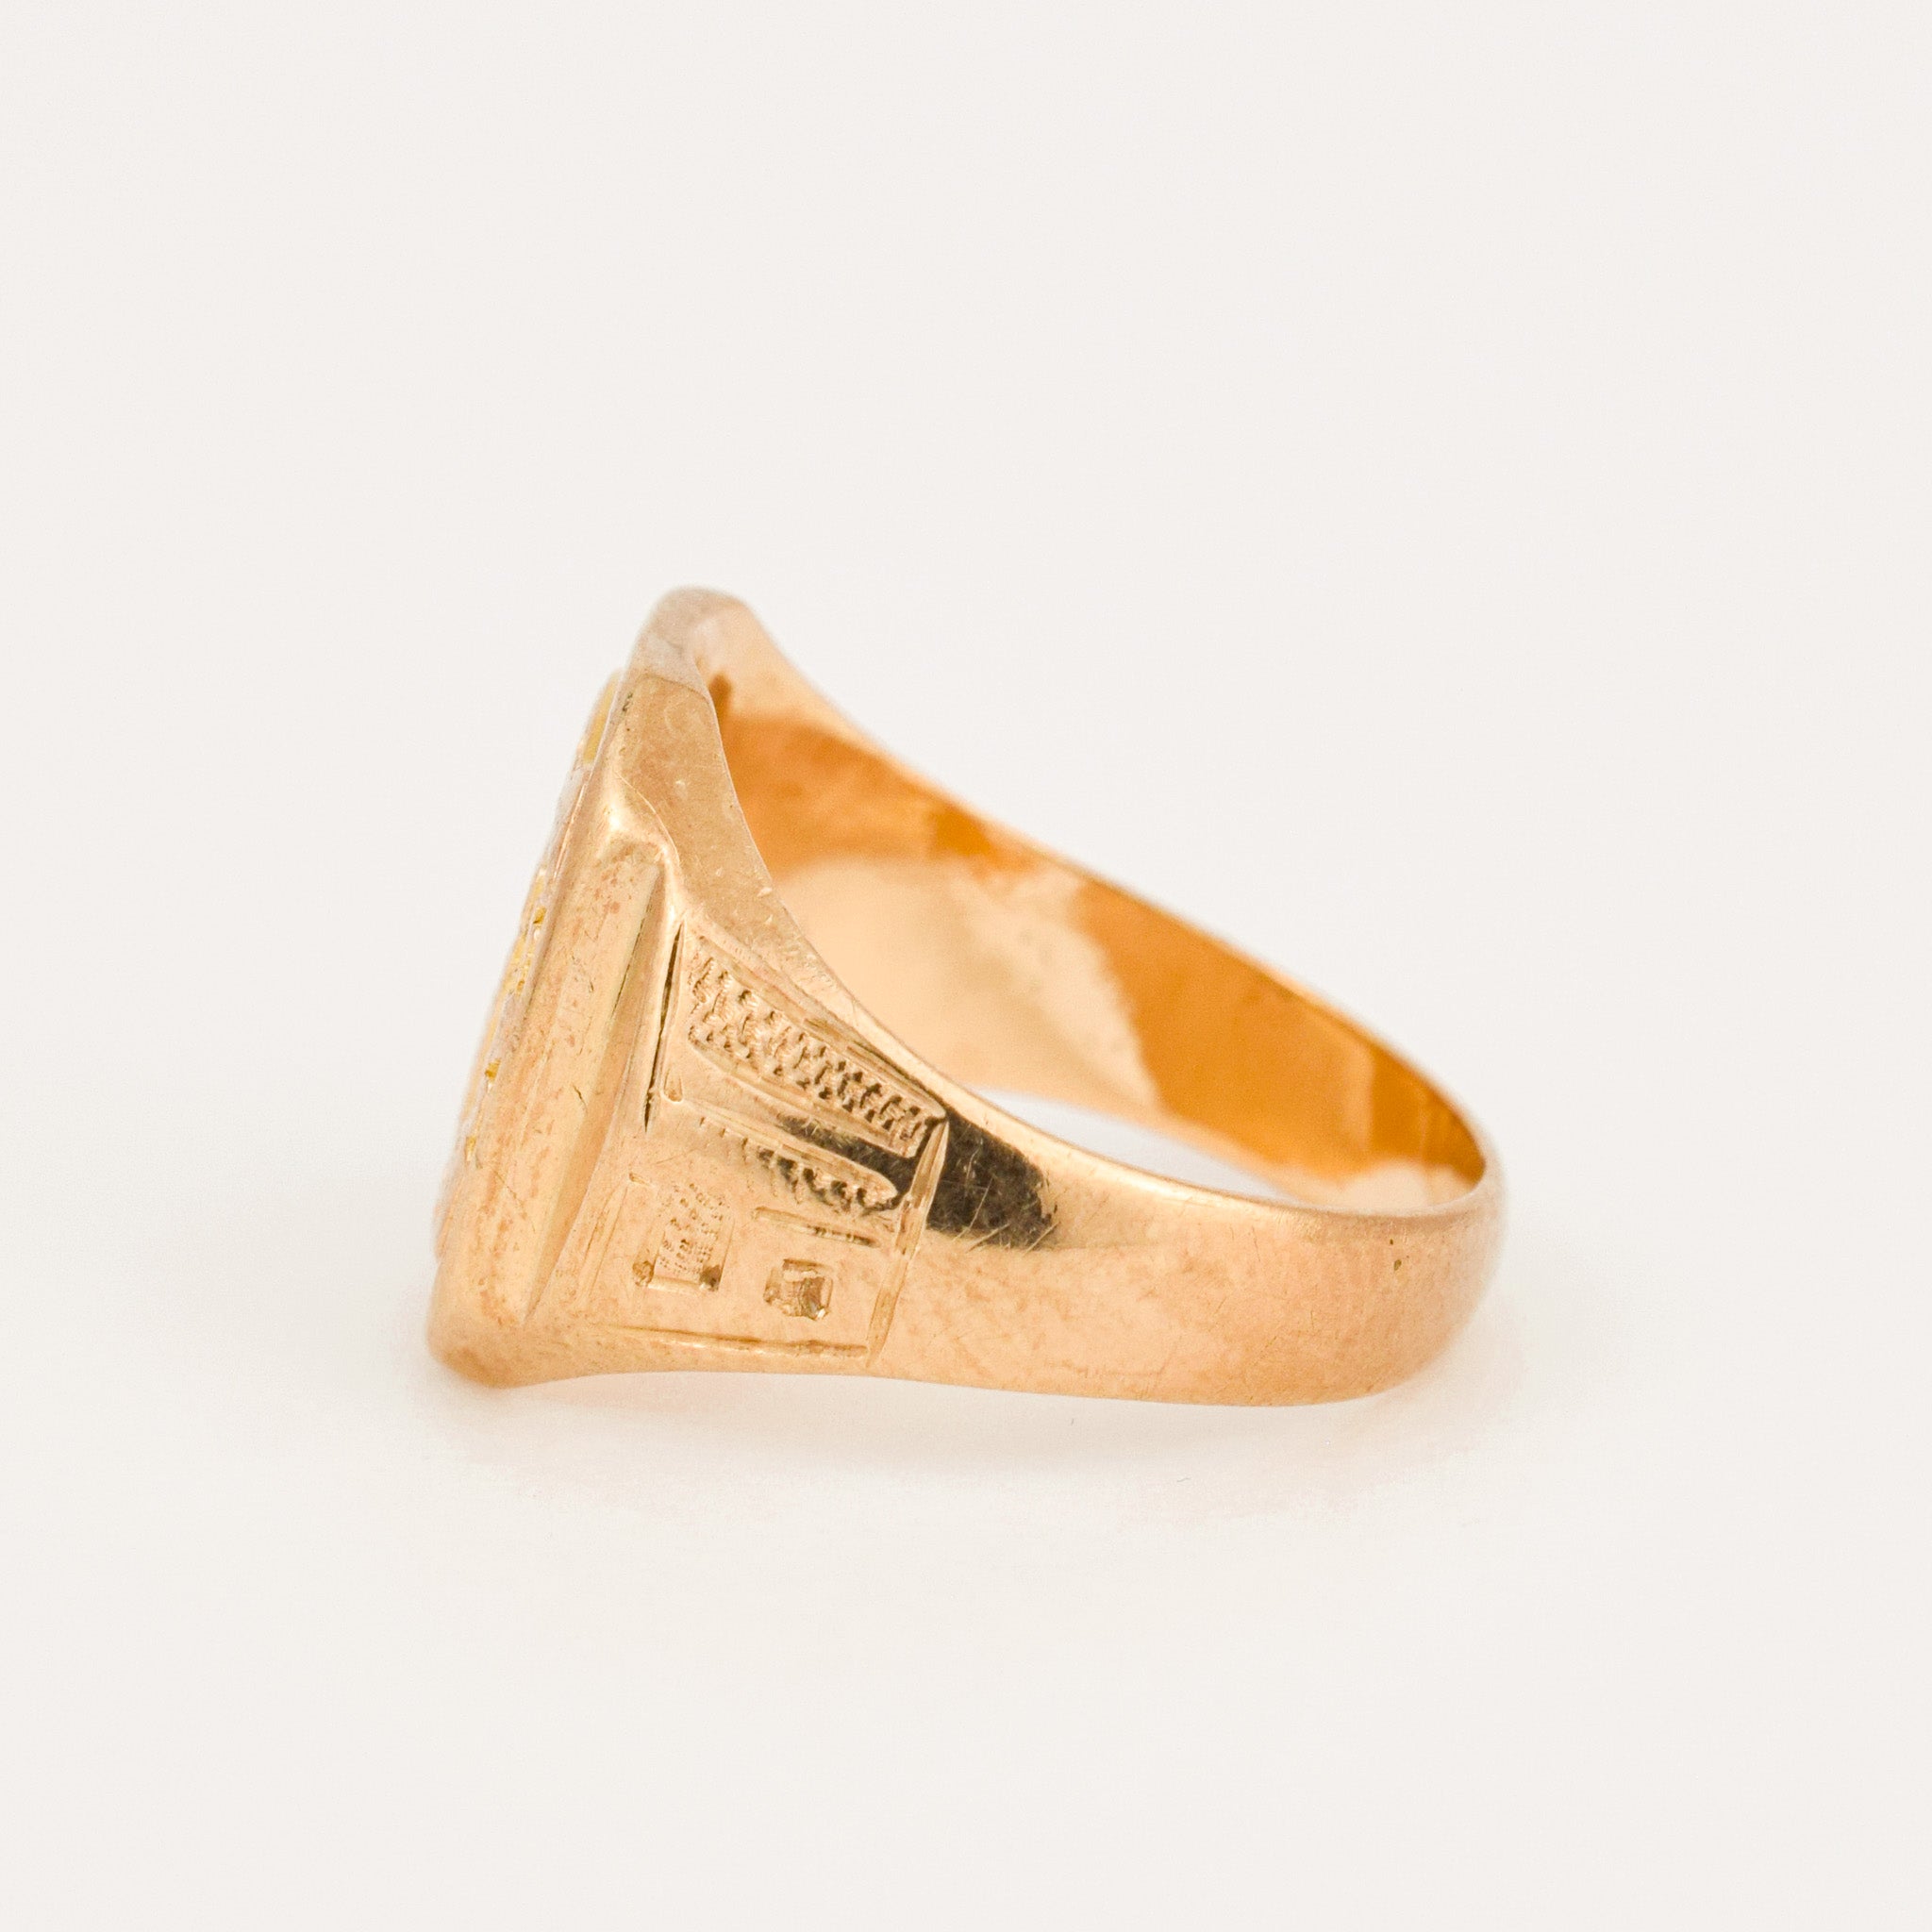 vintage McMaster University Signet Ring